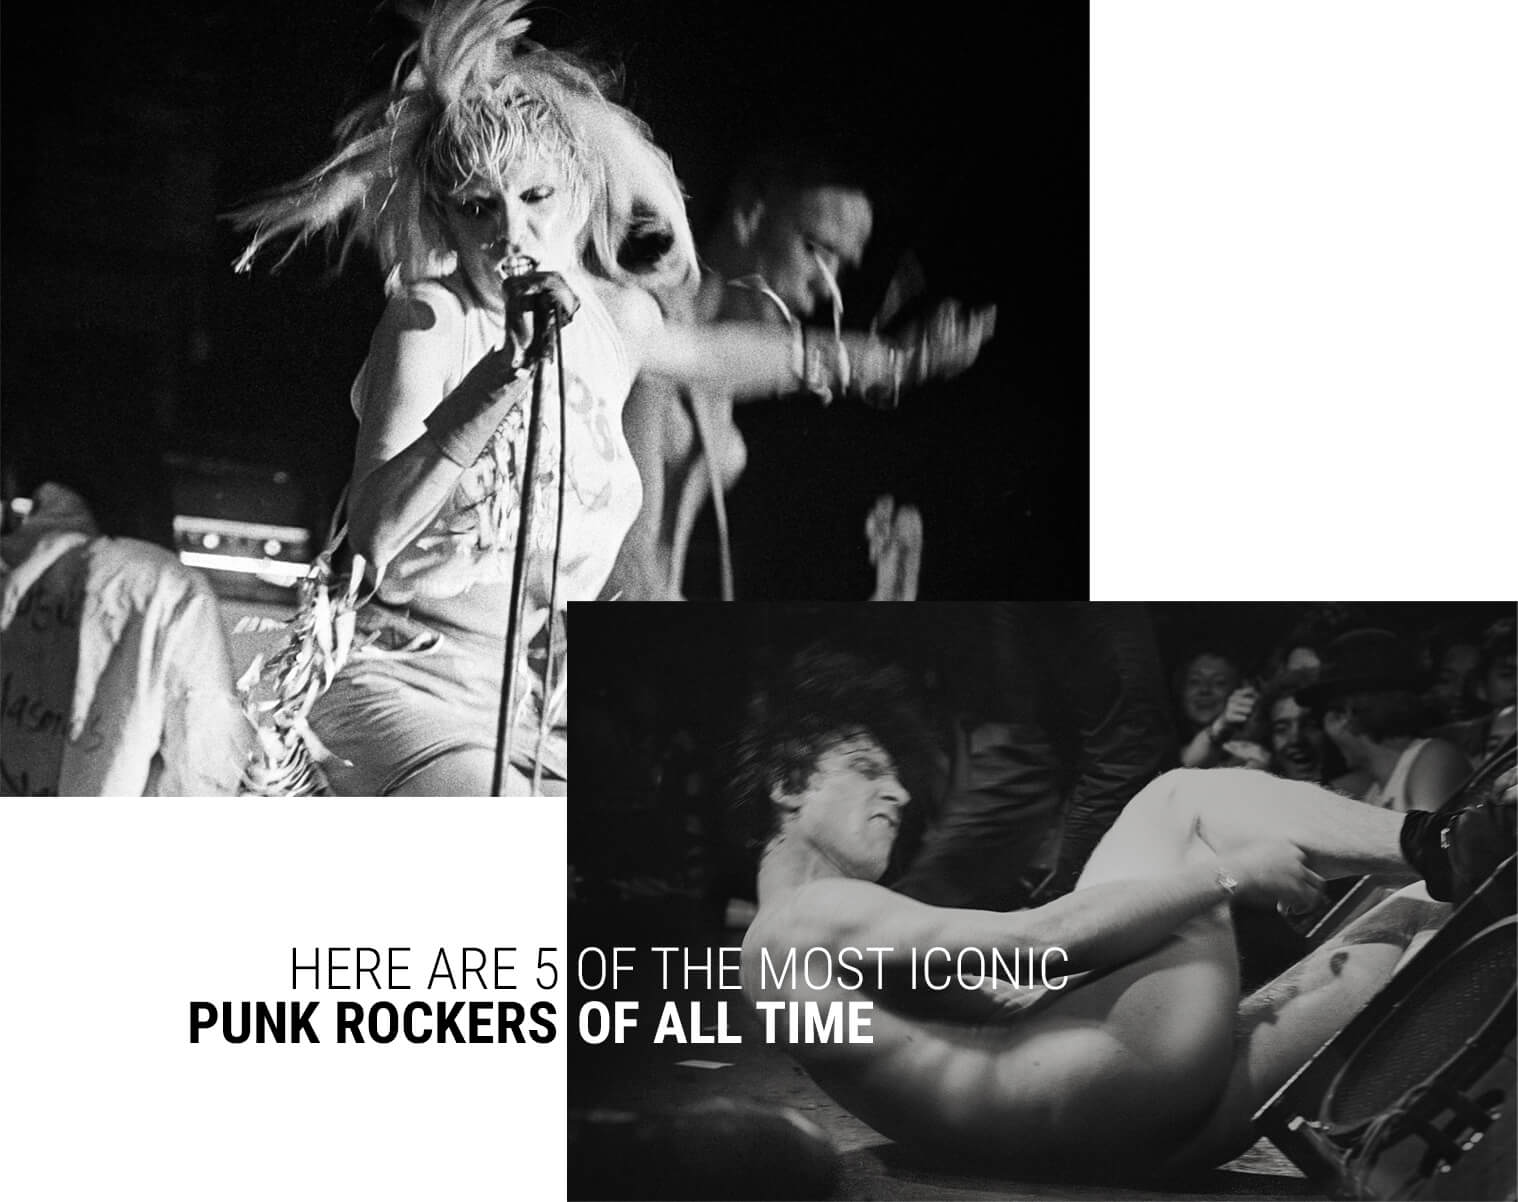 History-of-punk-rock-book-hero-image.jpg